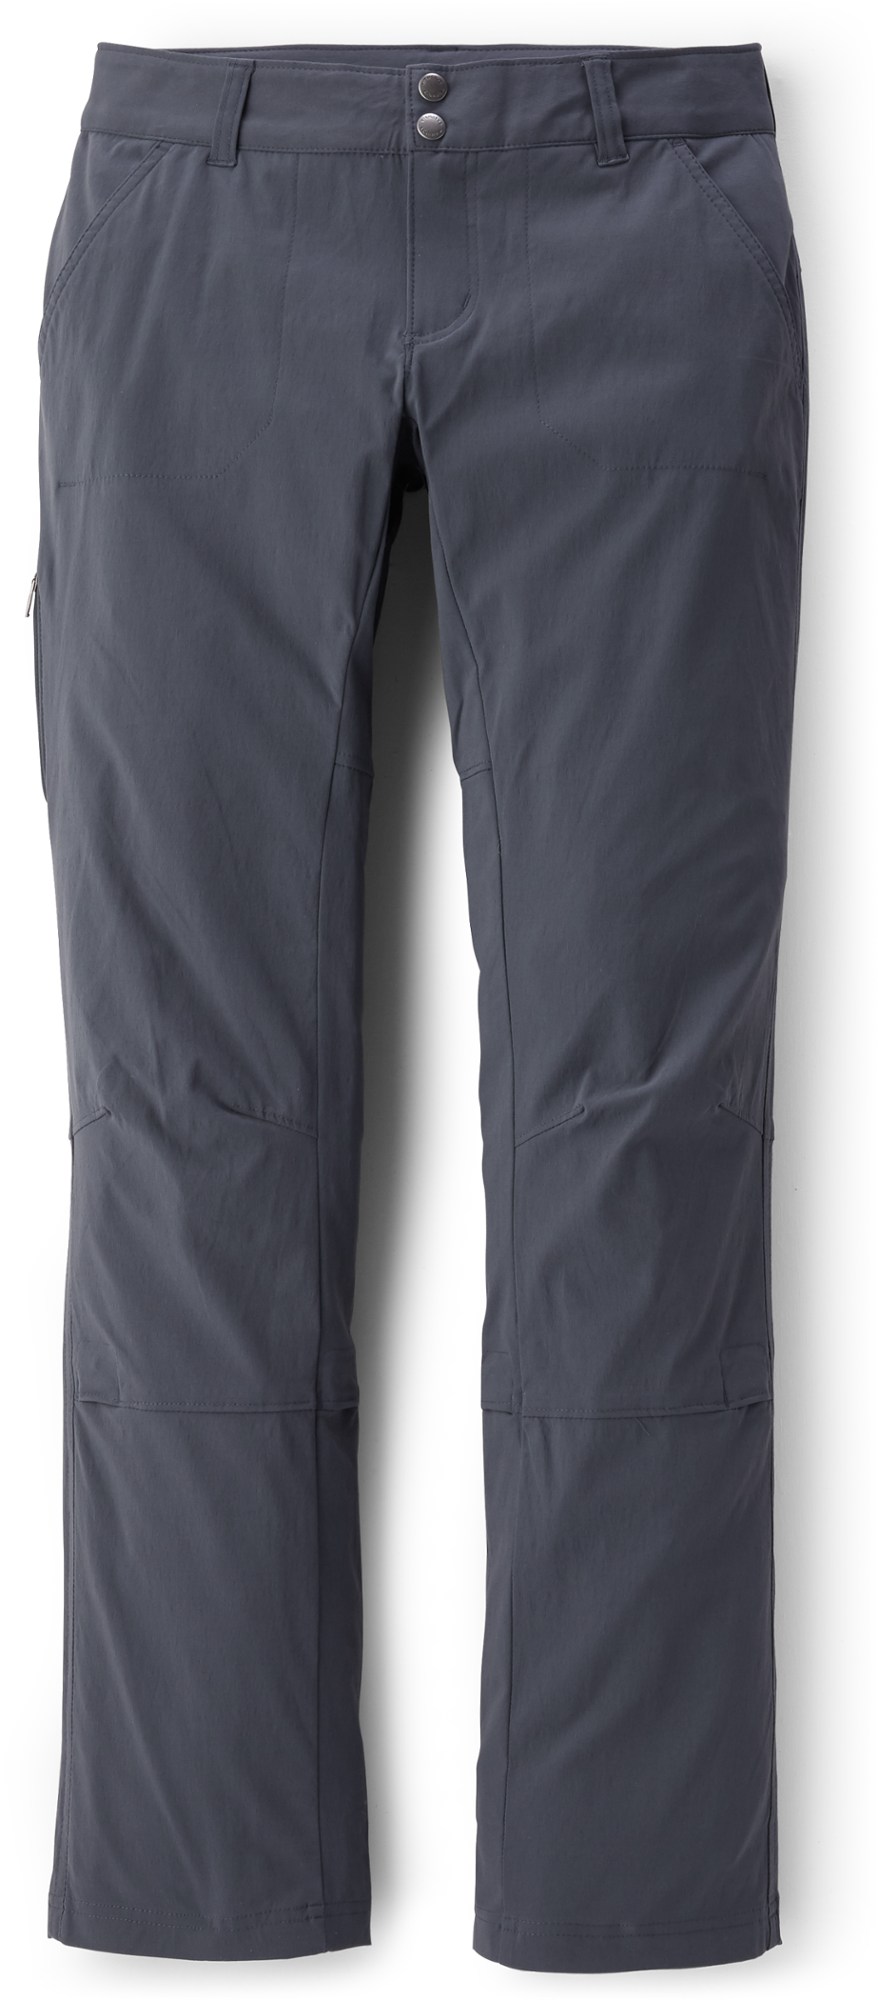 Softshell Trousers vs. Walking Trousers - a Comparison | Alpinetrek